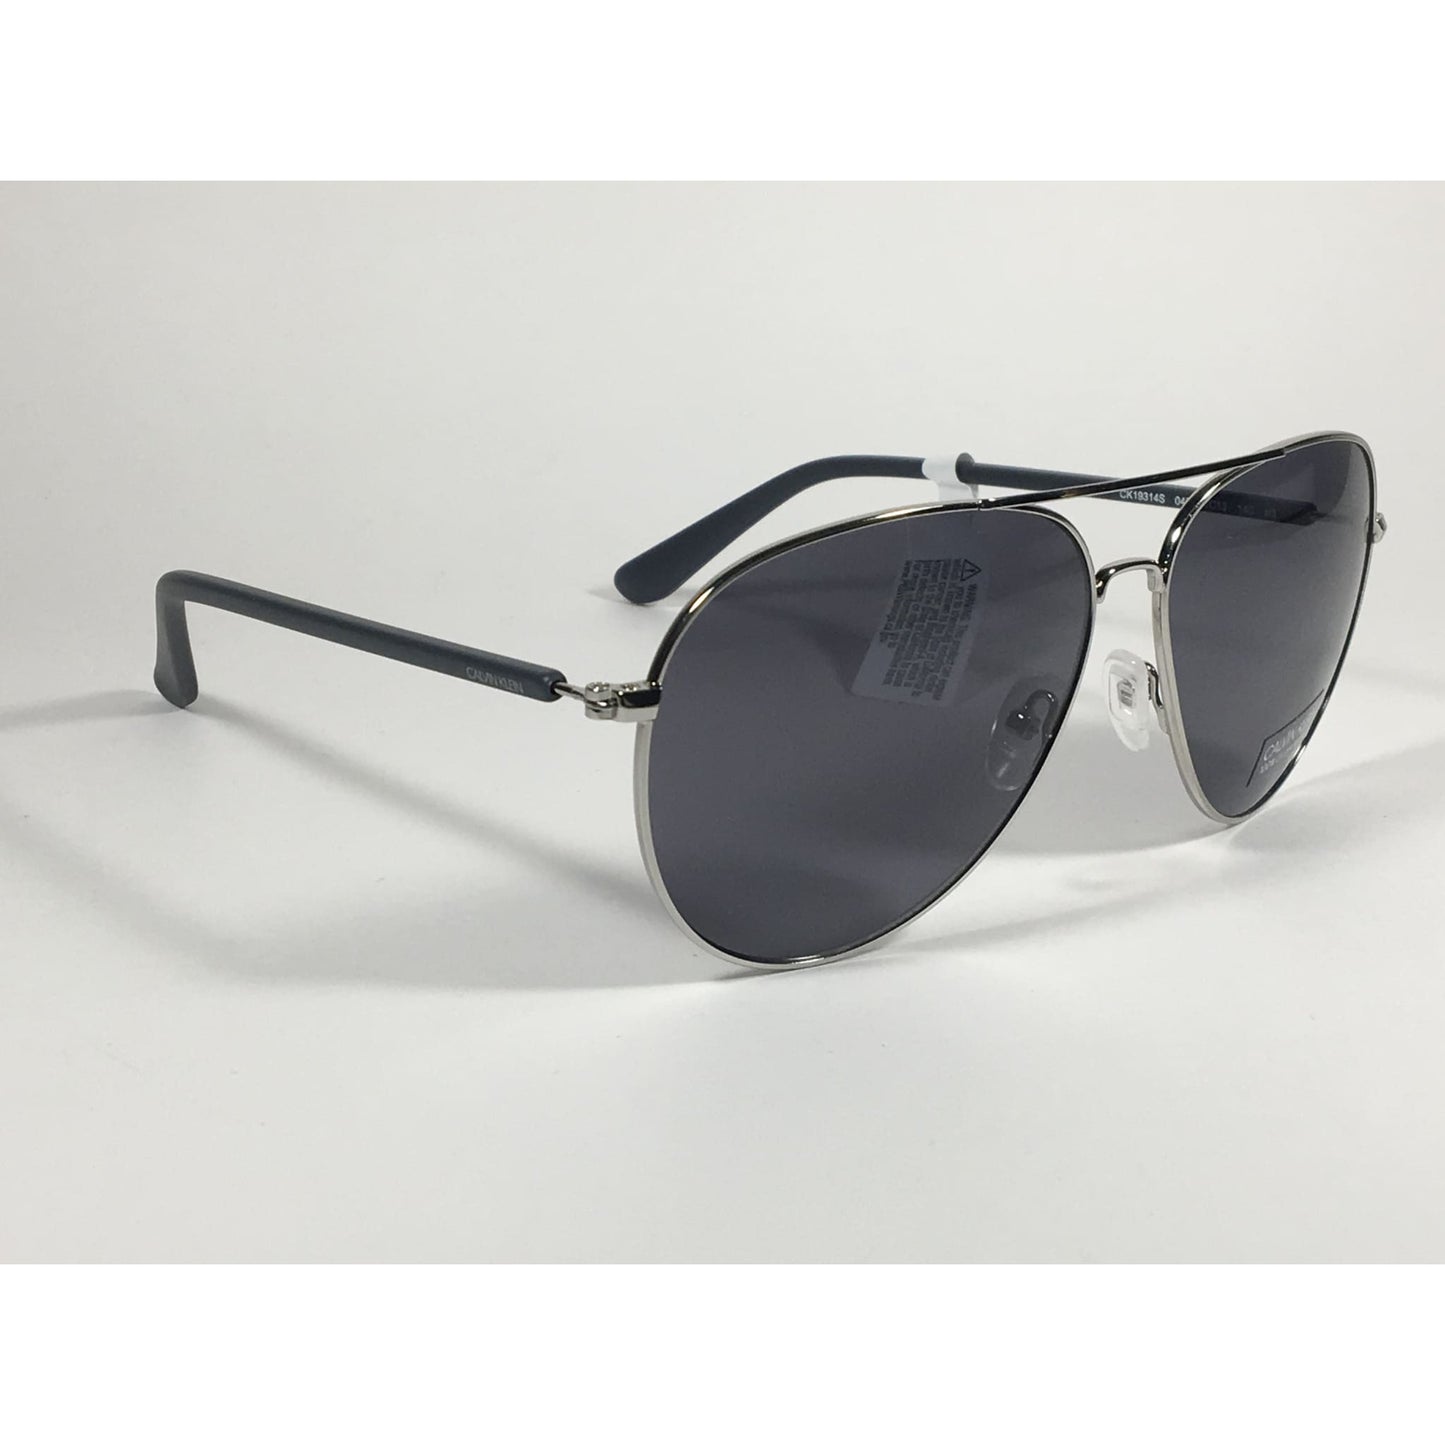 Calvin Klein CK19314S 045 Aviator Pilot Sunglasses Silver And Gray With Gray Lens - Sunglasses